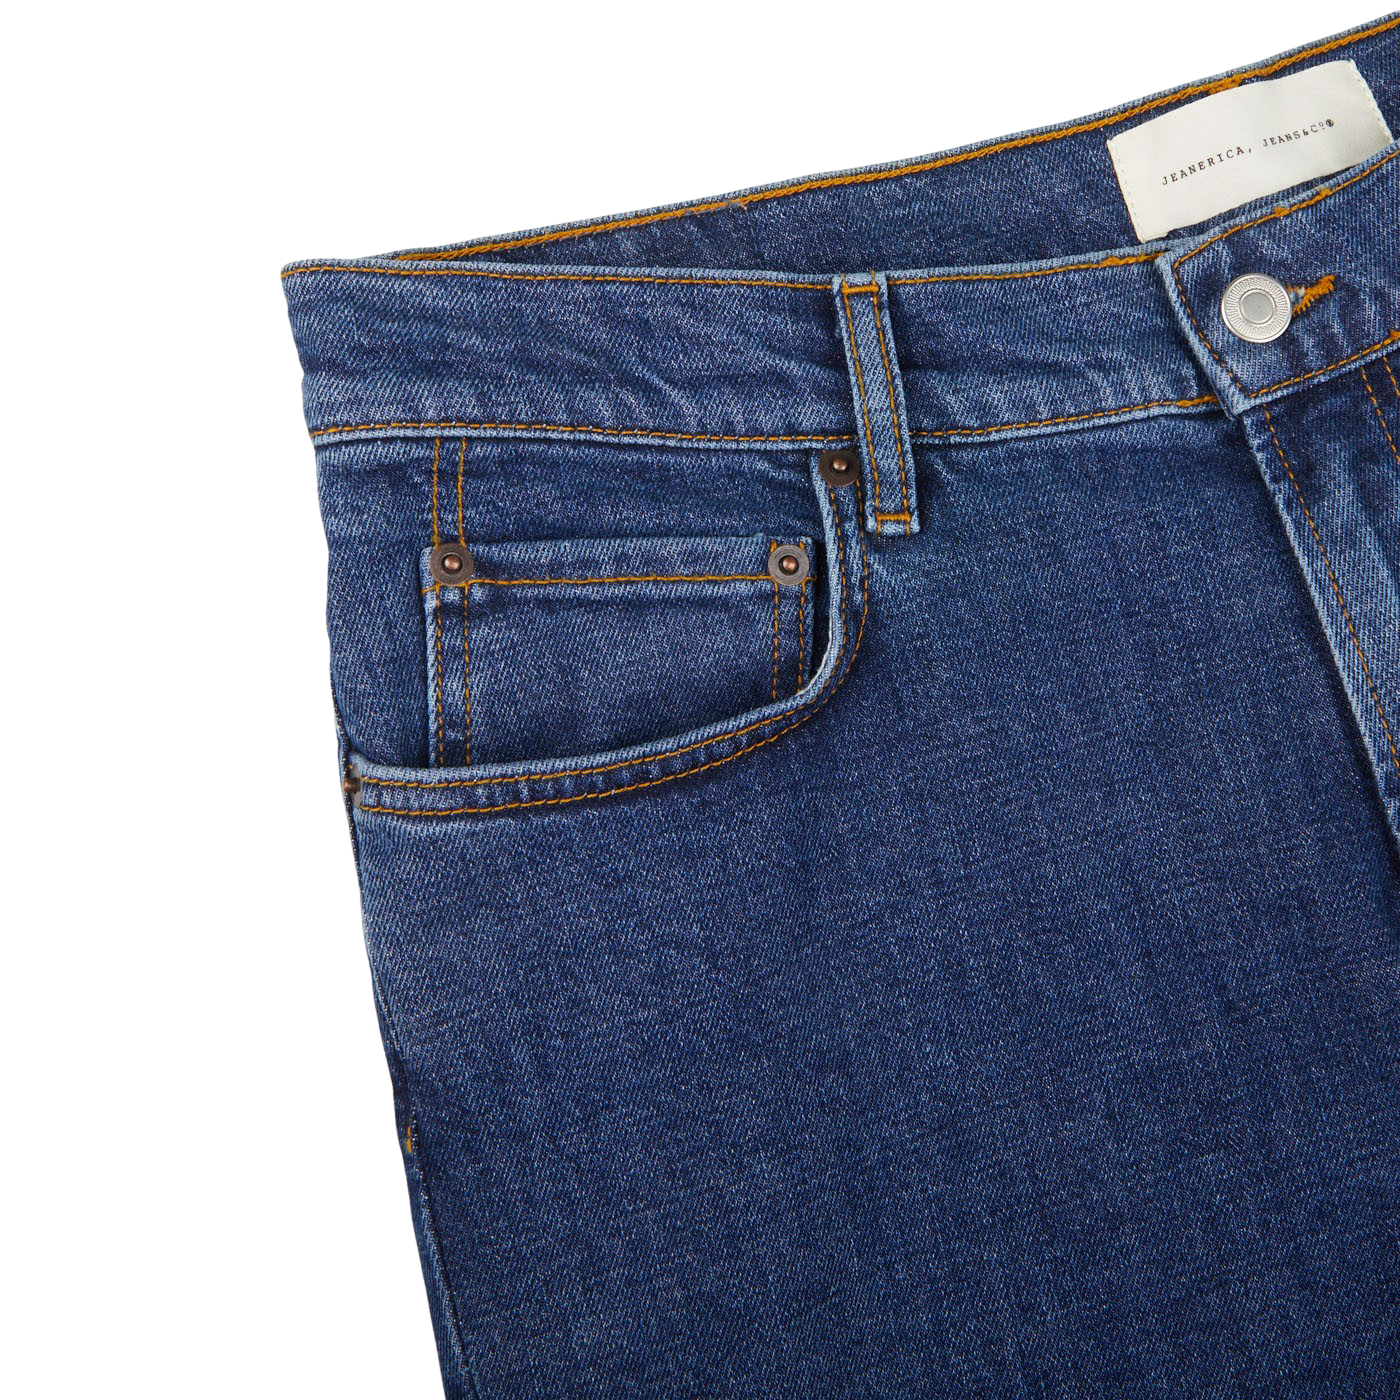 Jeanerica Blue Vintage 95 Cotton SM001 Jeans Edge